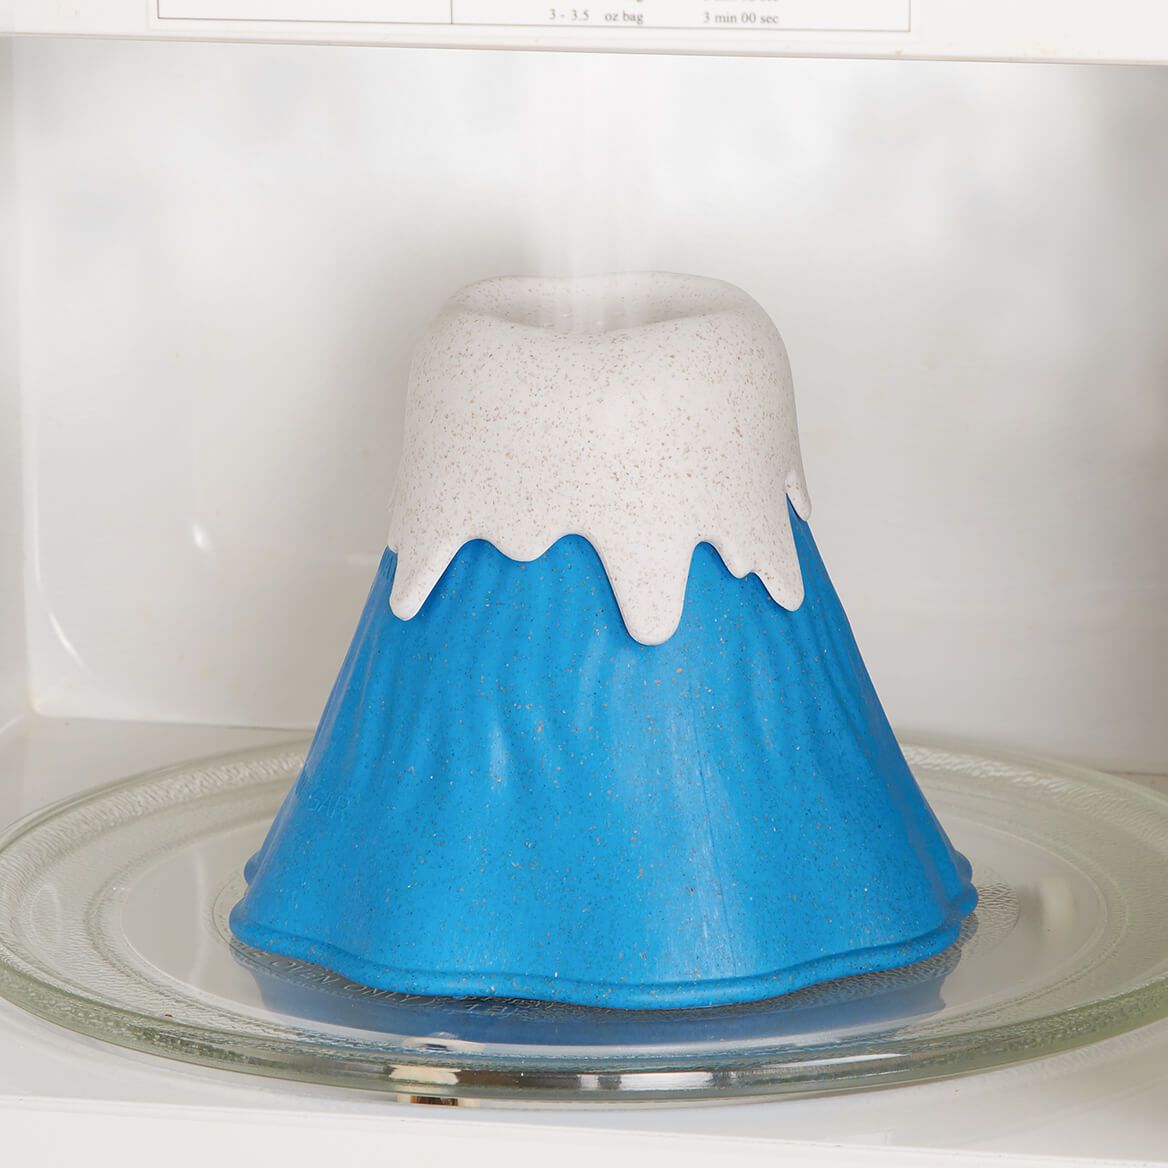 Eco Volcano Microwave Cleaner + '-' + 372018